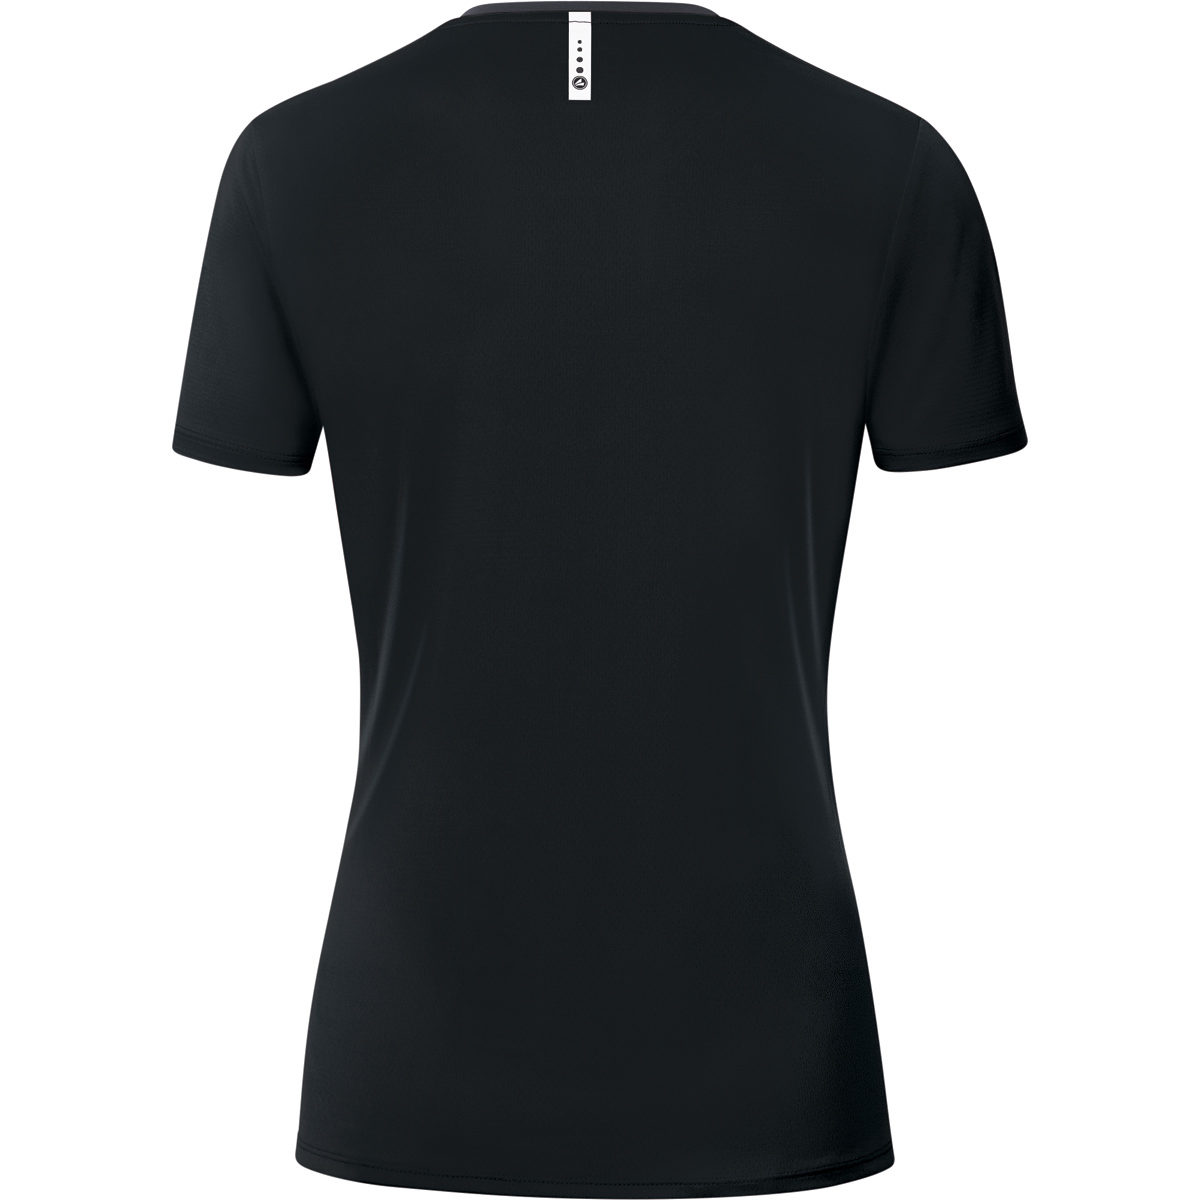 JAKO T-Shirt 2.0 44, 6120 schwarz/anthrazit, Damen, Champ Gr